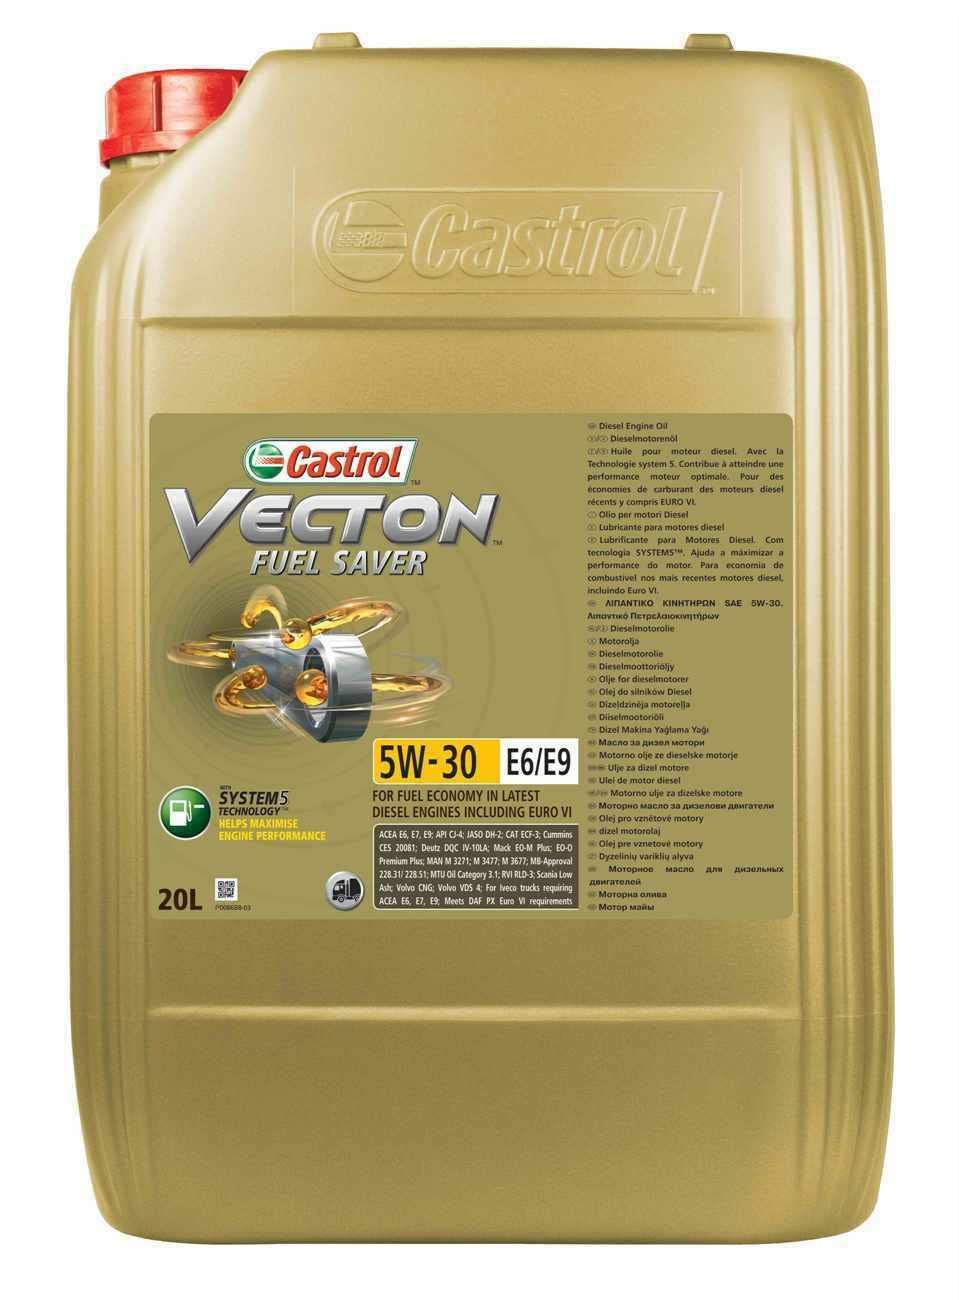 Castrol Vecton Fuel Saver 5W-30 E6/E9 Motoröl 20l Kanister von Castrol